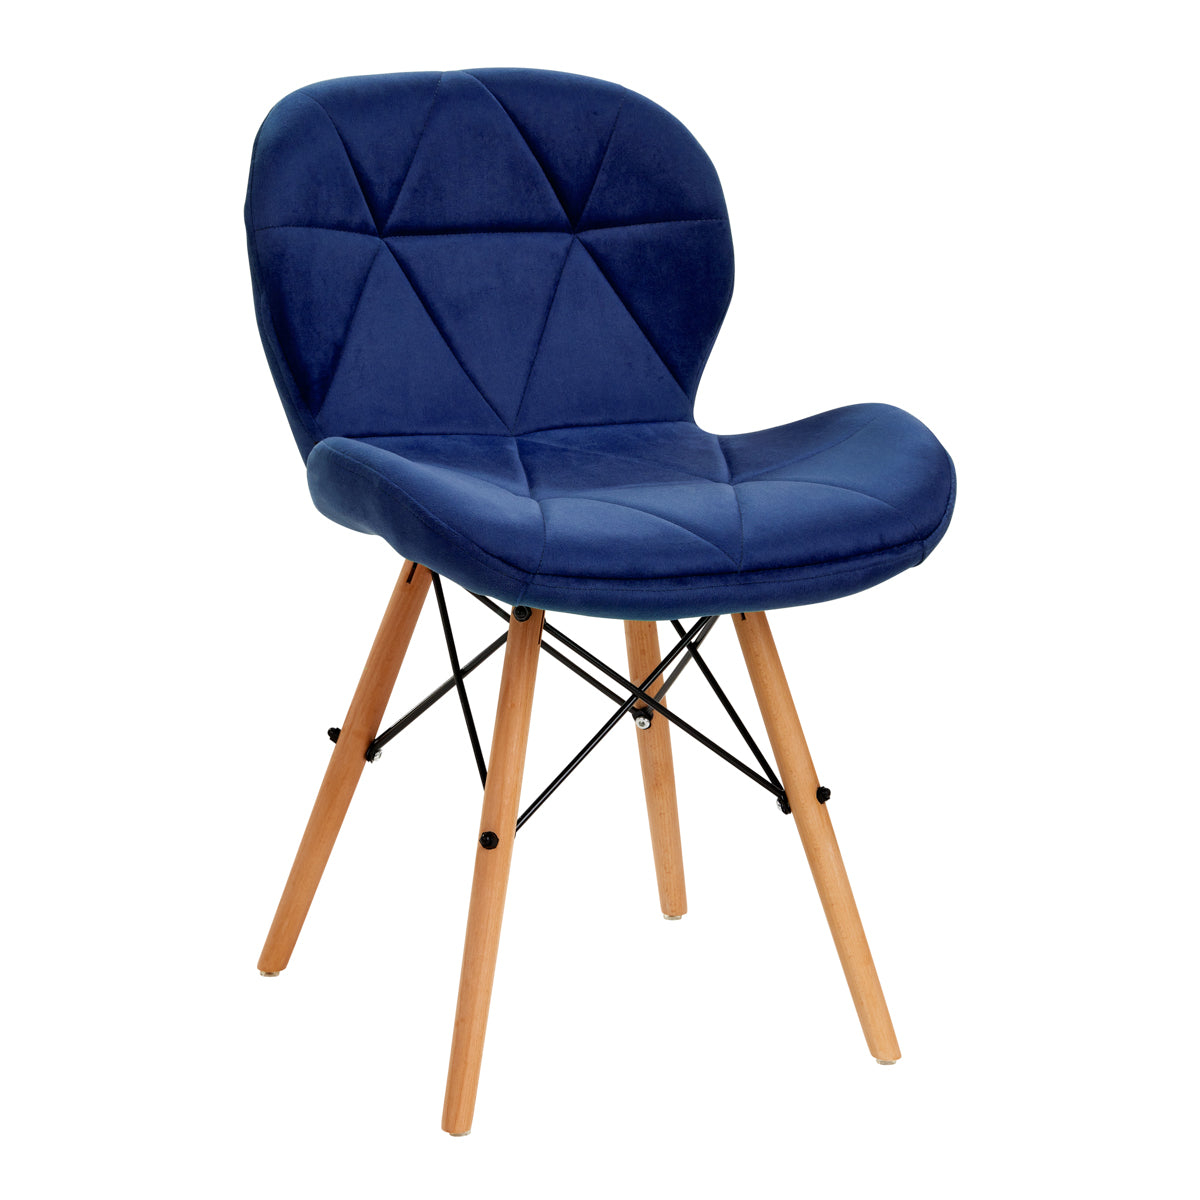 4Rico cosmetic chair QS-186 velvet navy blue 